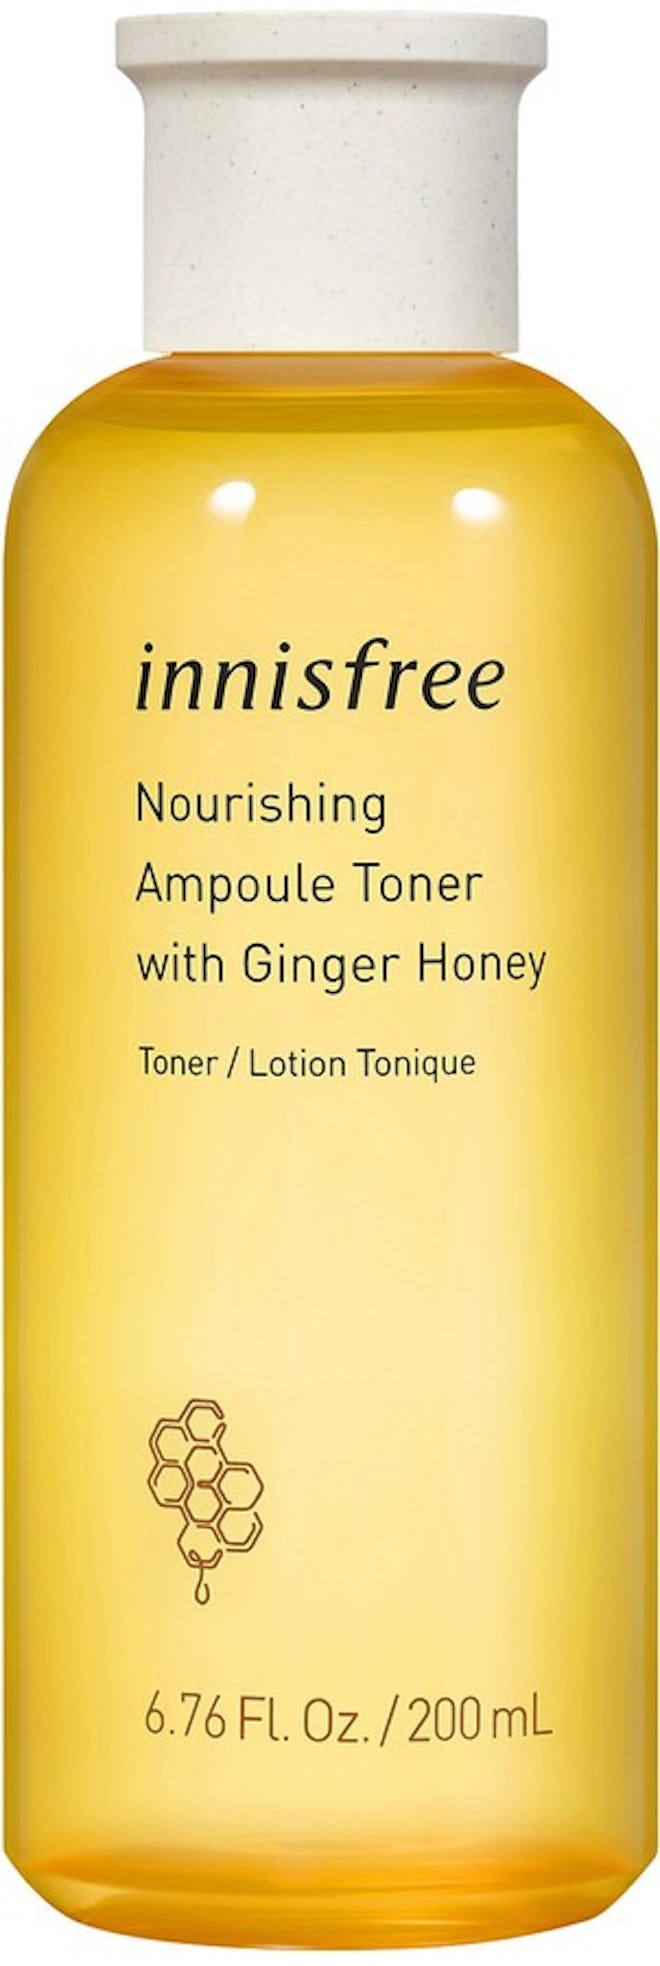 innisfree Ginger Honey Nourishing Ampoule Toner